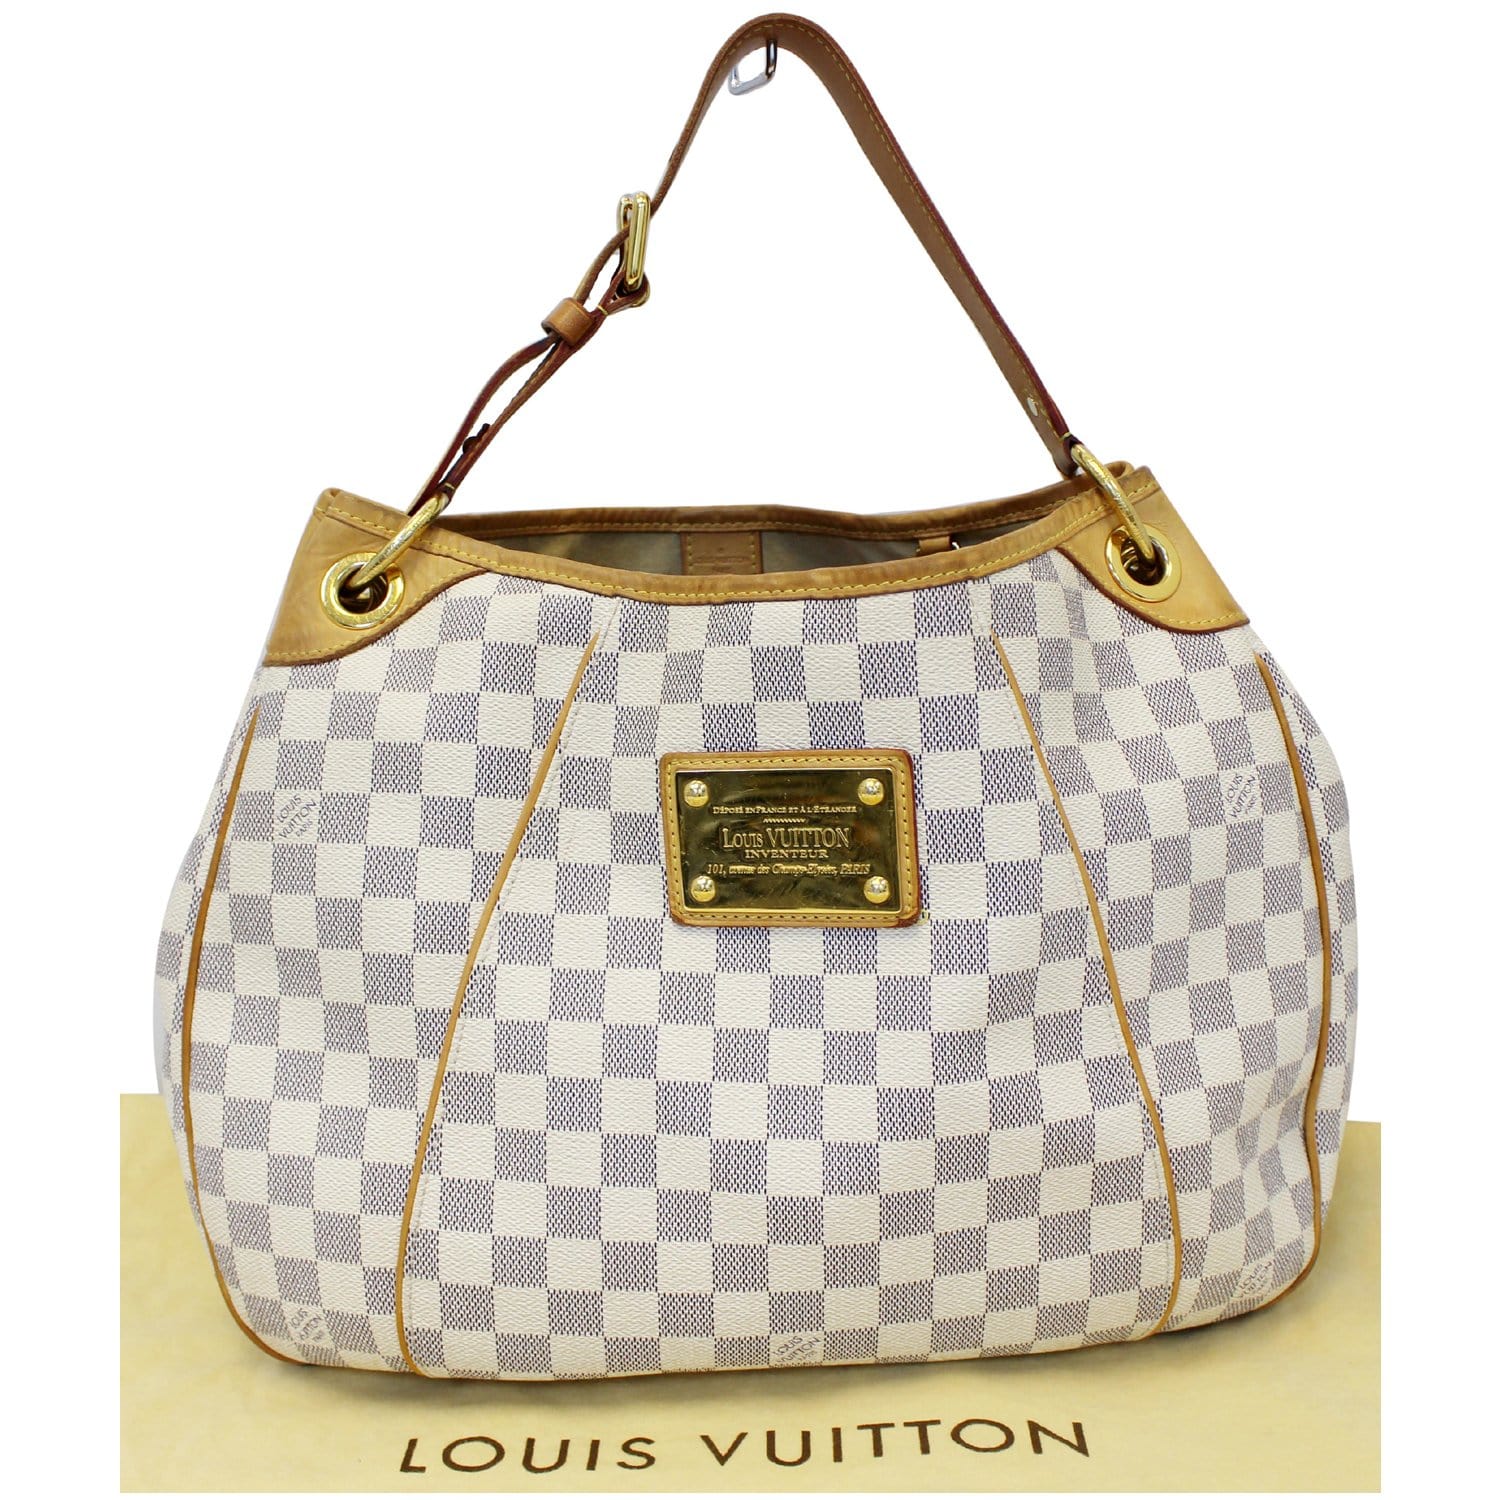 Louis Vuitton Damier Azur Galliera PM purse